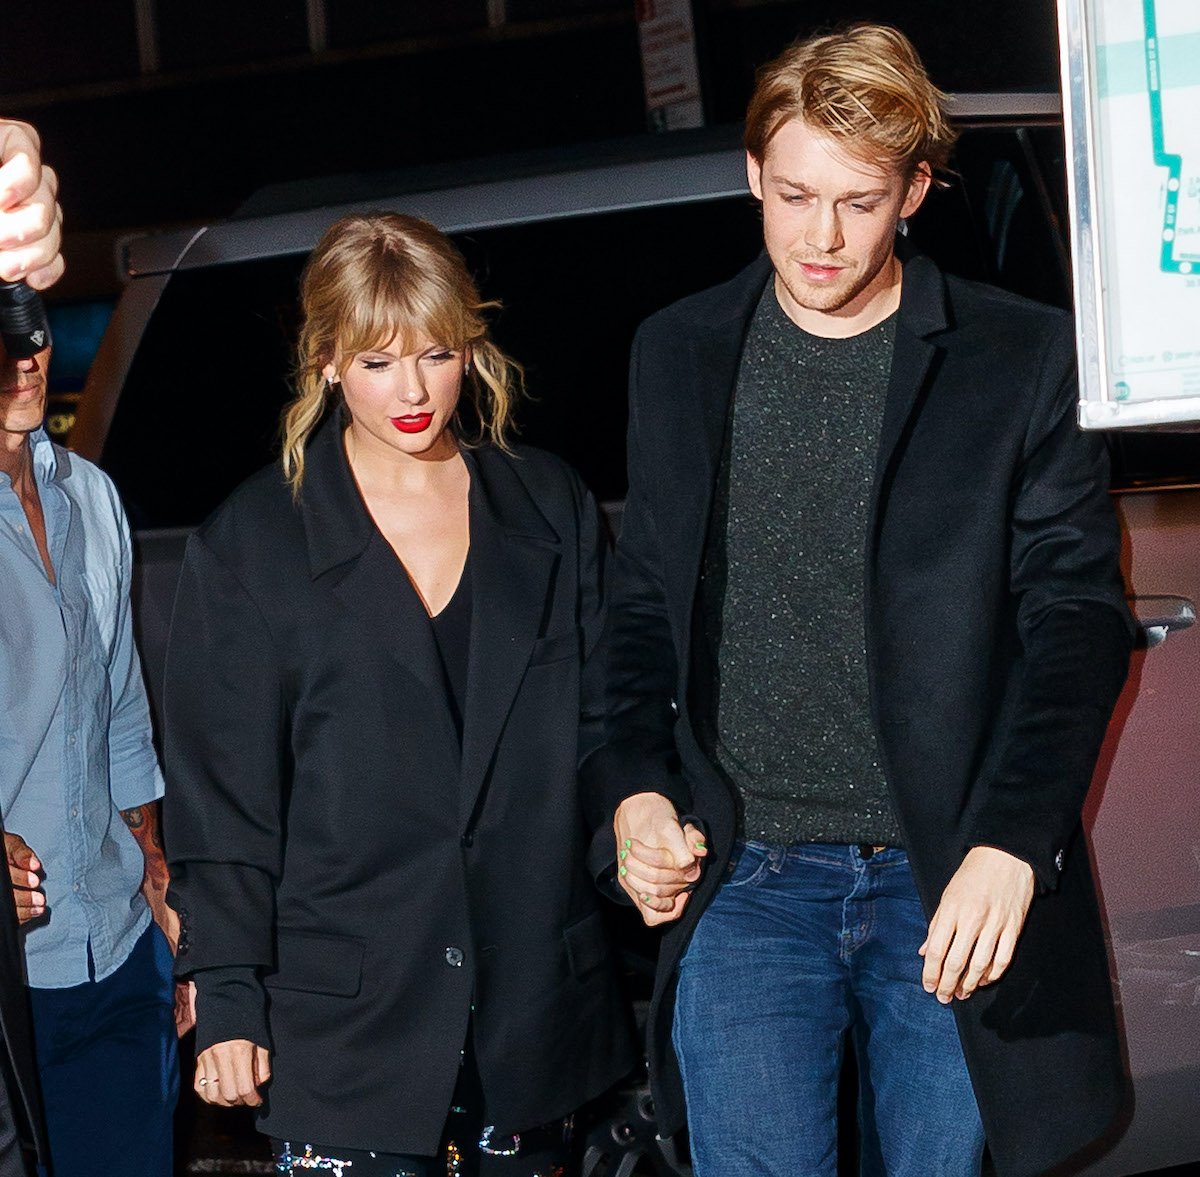 Taylor Swift and boyfriend Joe Alwyn hold hands as they exit a car